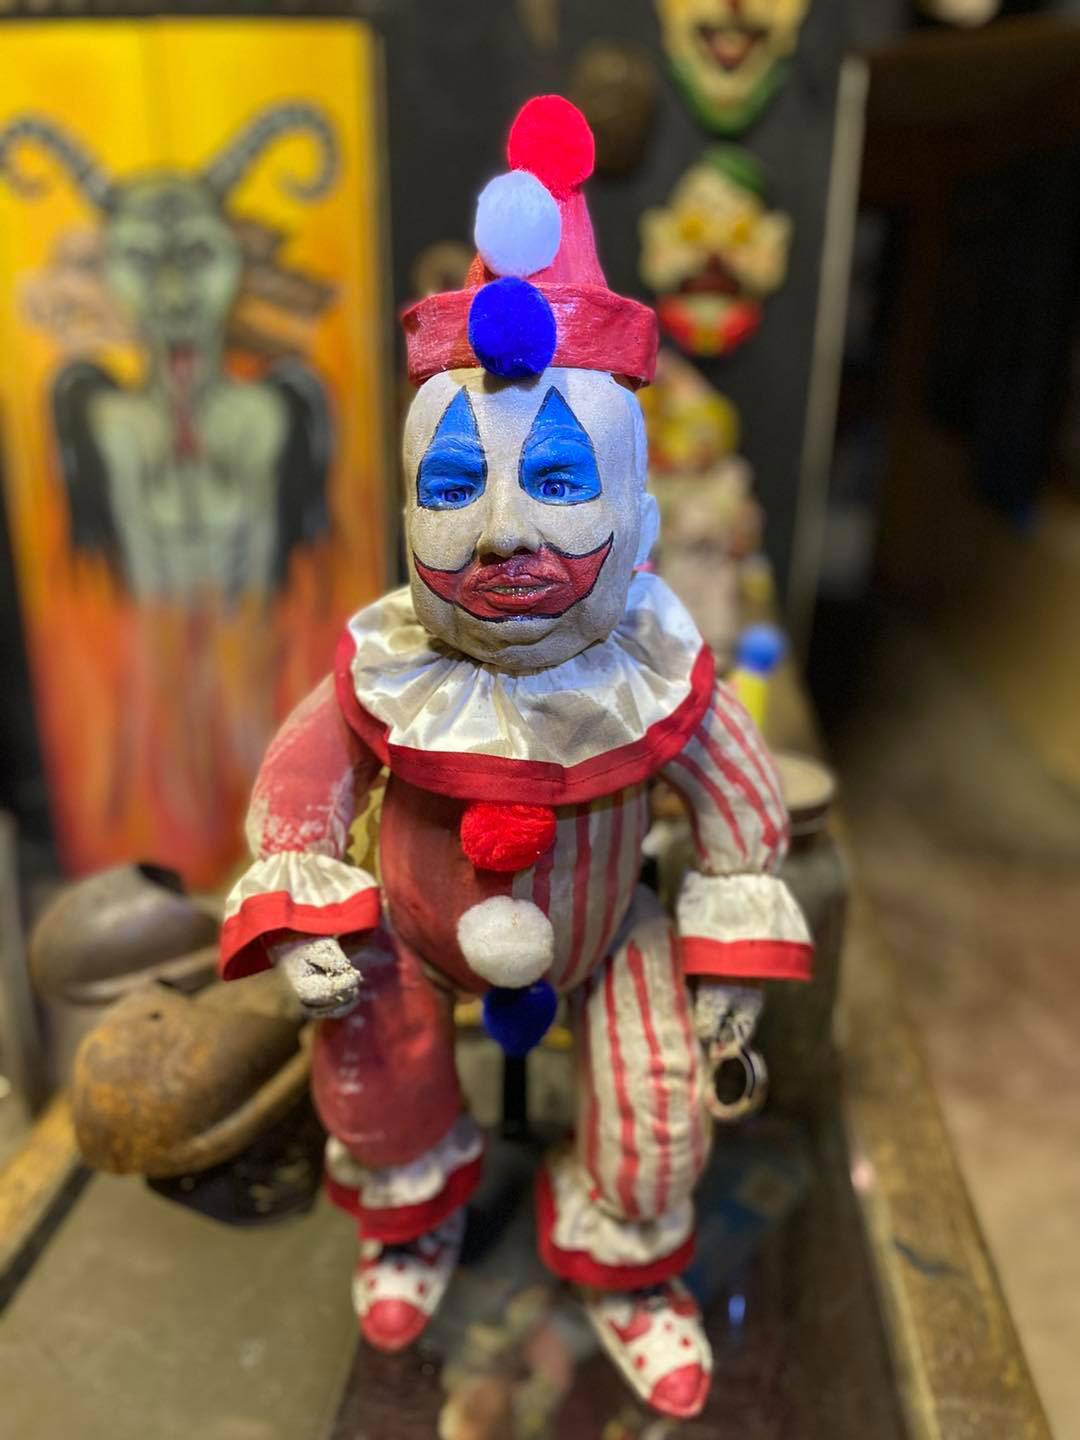 John Wayne Gacy Pogo The Clown Doll